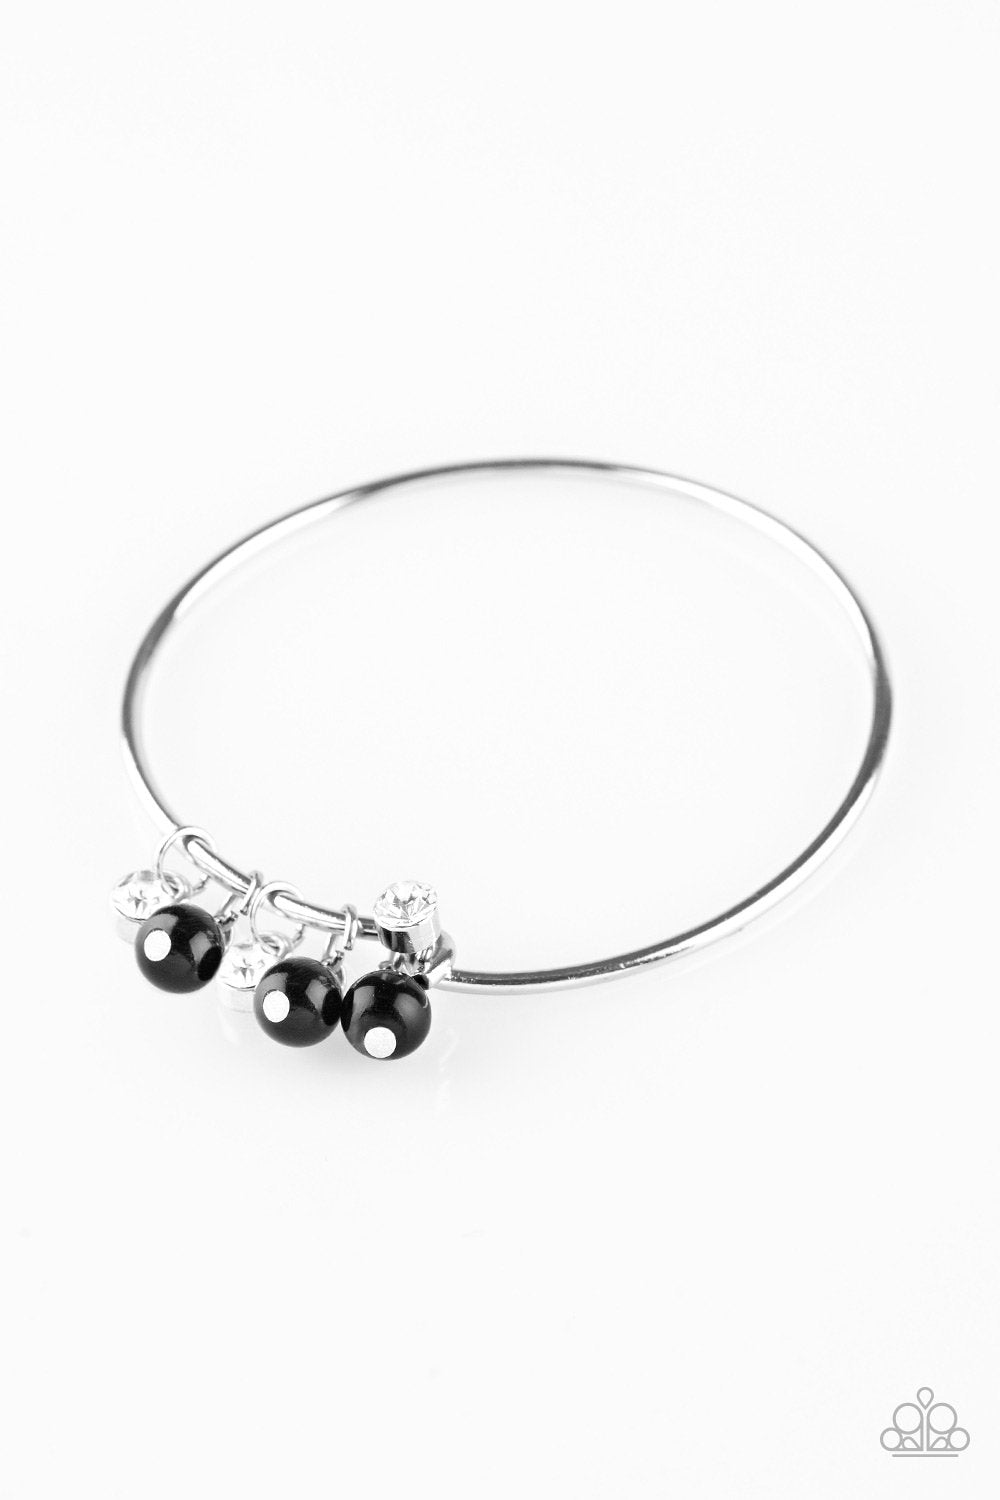 Marine Melody Black Bead And White Rhinestone Charm Bangle Bracelet - Paparazzi Accessories-CarasShop.com - $5 Jewelry by Cara Jewels